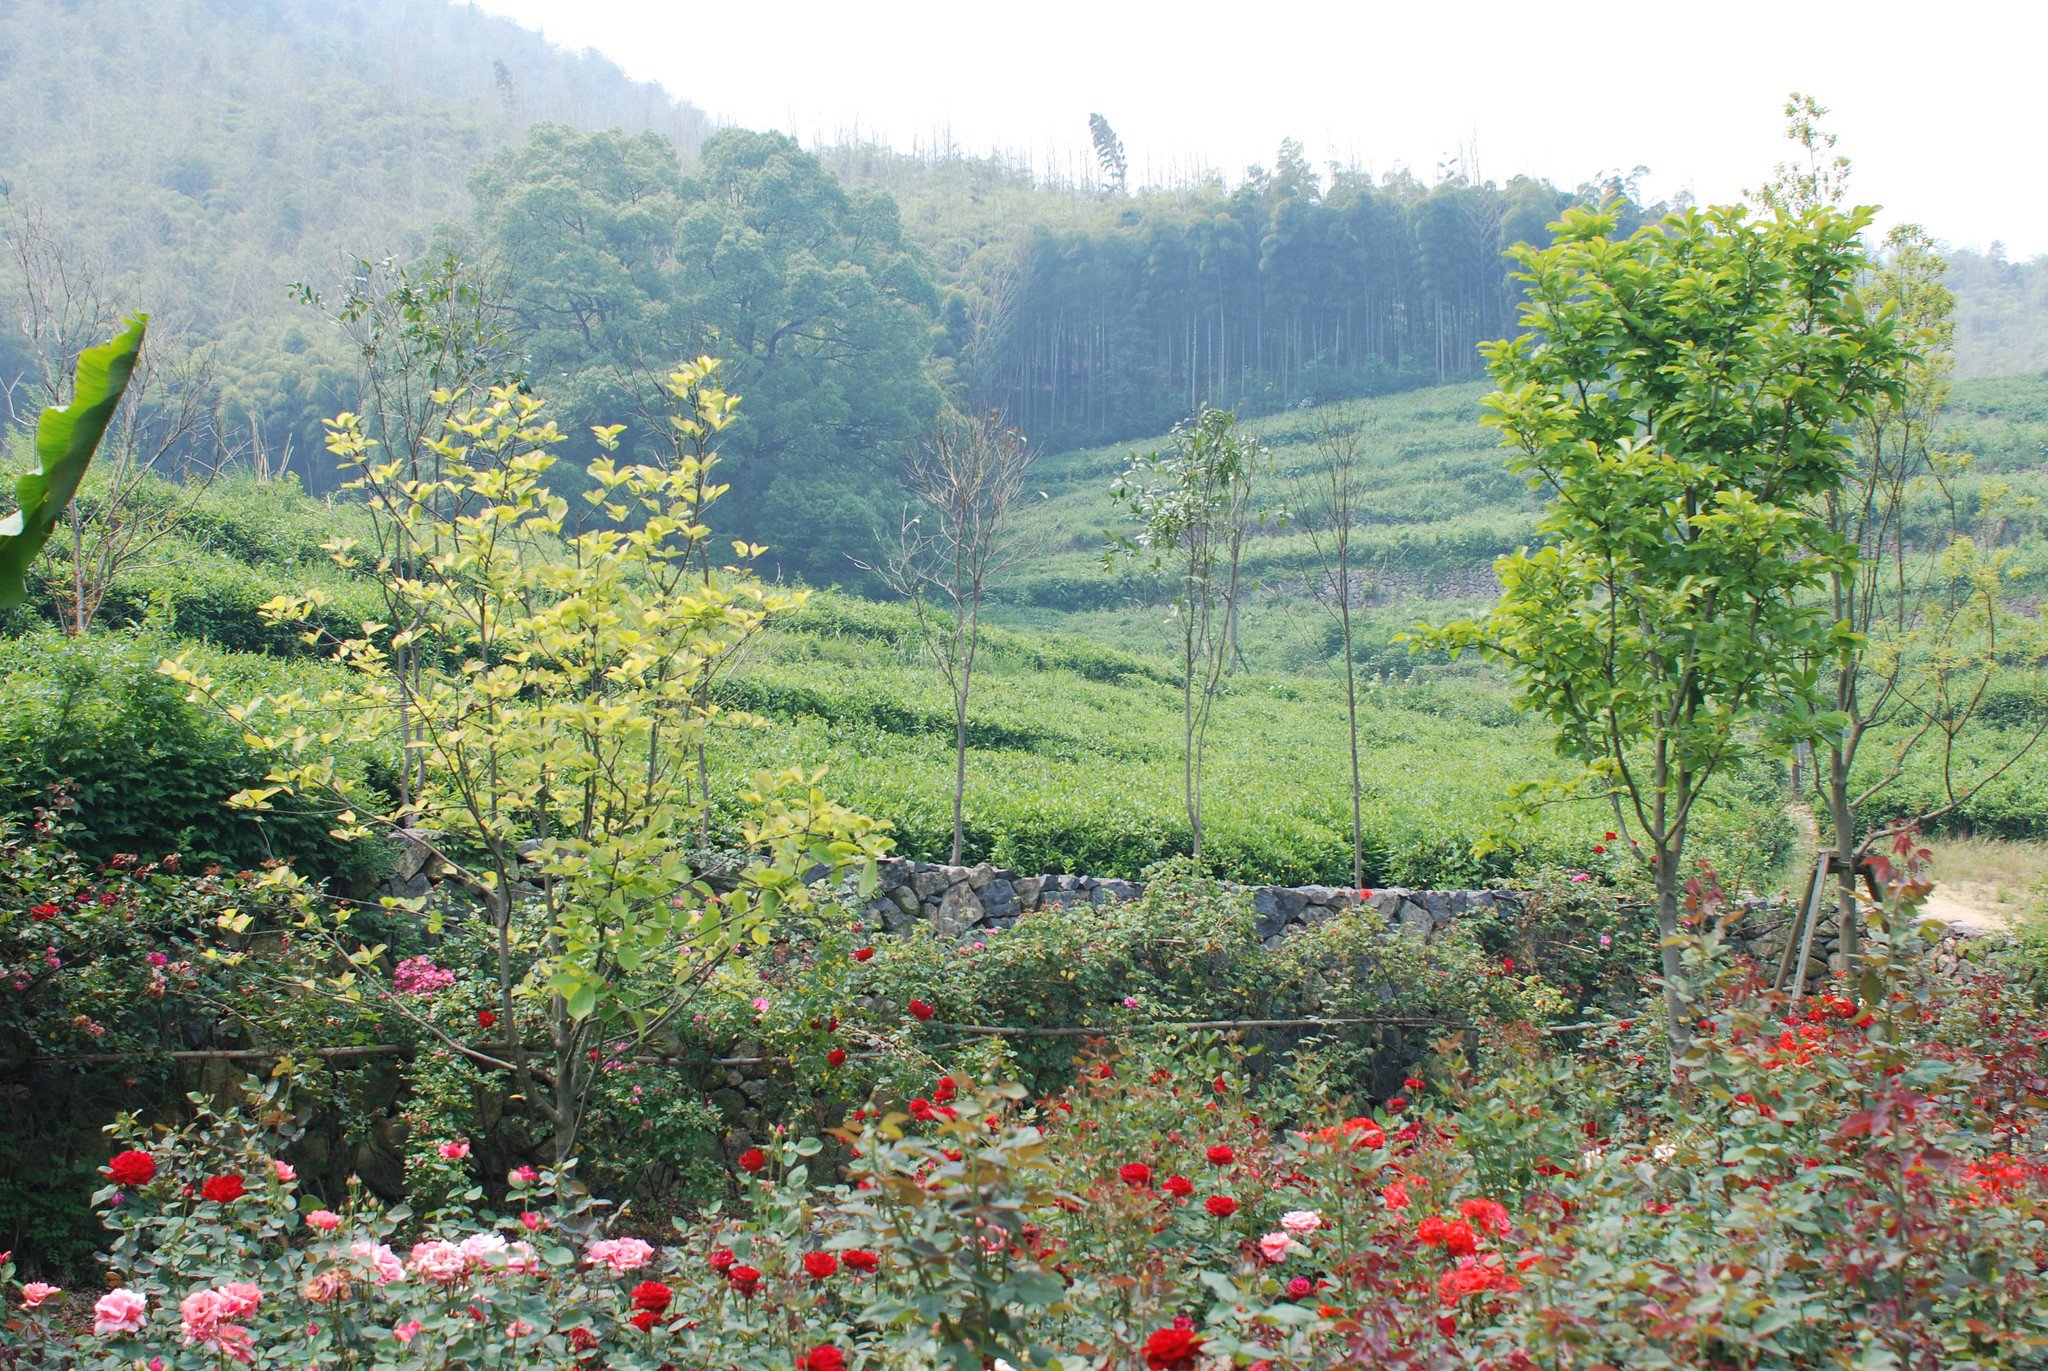 Rose Garden and Rows of Tea Bushes